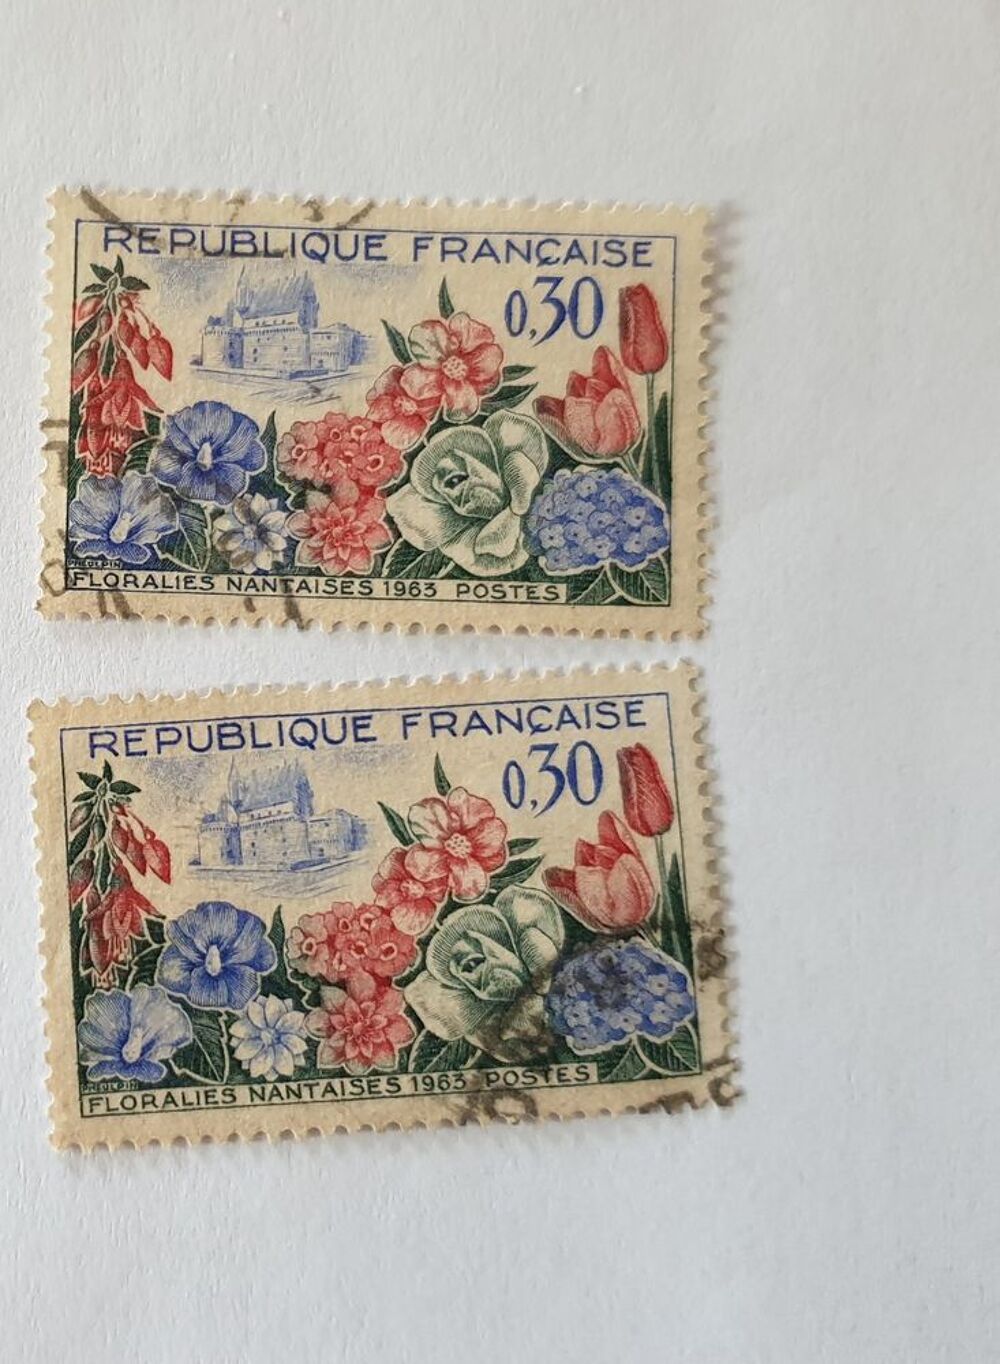 Timbre france Floralies nantaises 1963 - lot 0.12 euro 